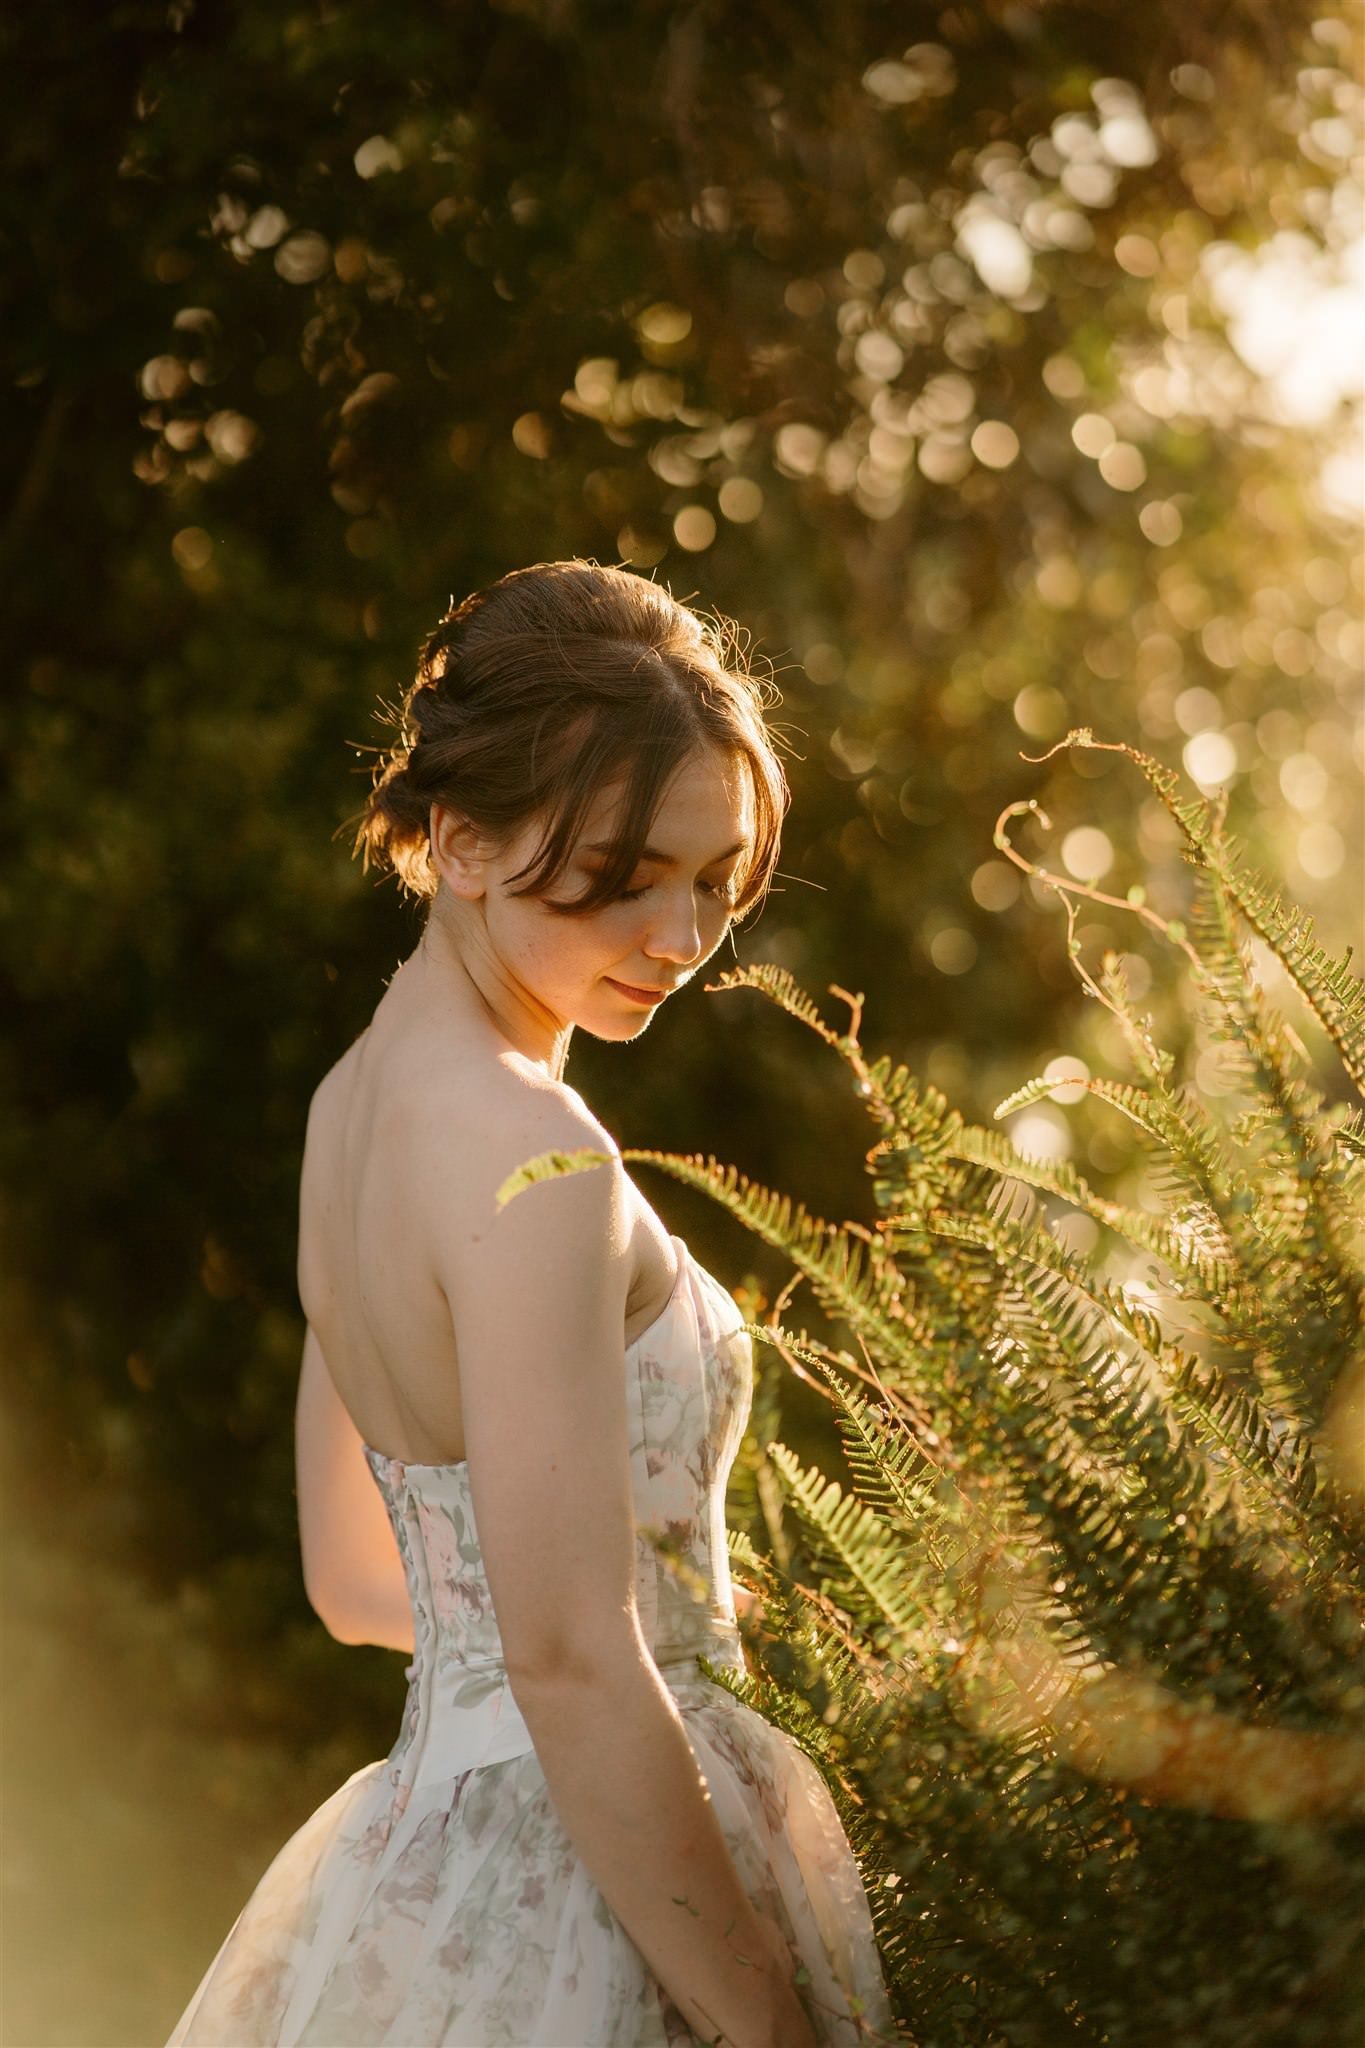 home-backyard-wedding-diy-best-kiwi-traditional-korean-hanbok-wedding-gown-Choson-ot-auckland-wedding-photographer-videography-dear-white-productions (64).jpg